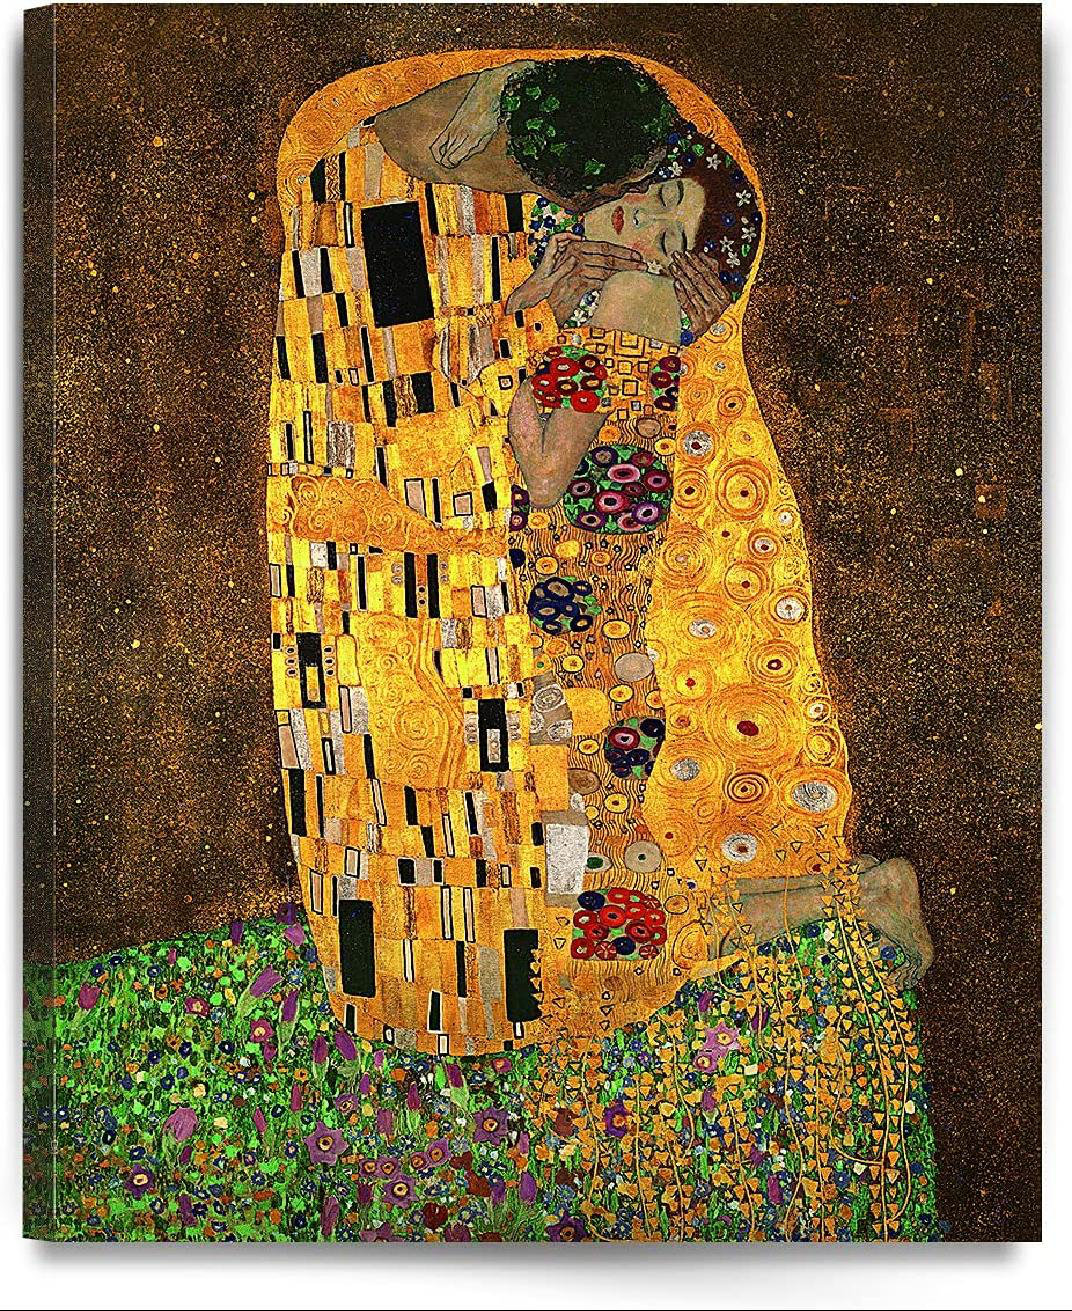 Soucoupe Klimt repose sachet - Soucoupe repose sachet